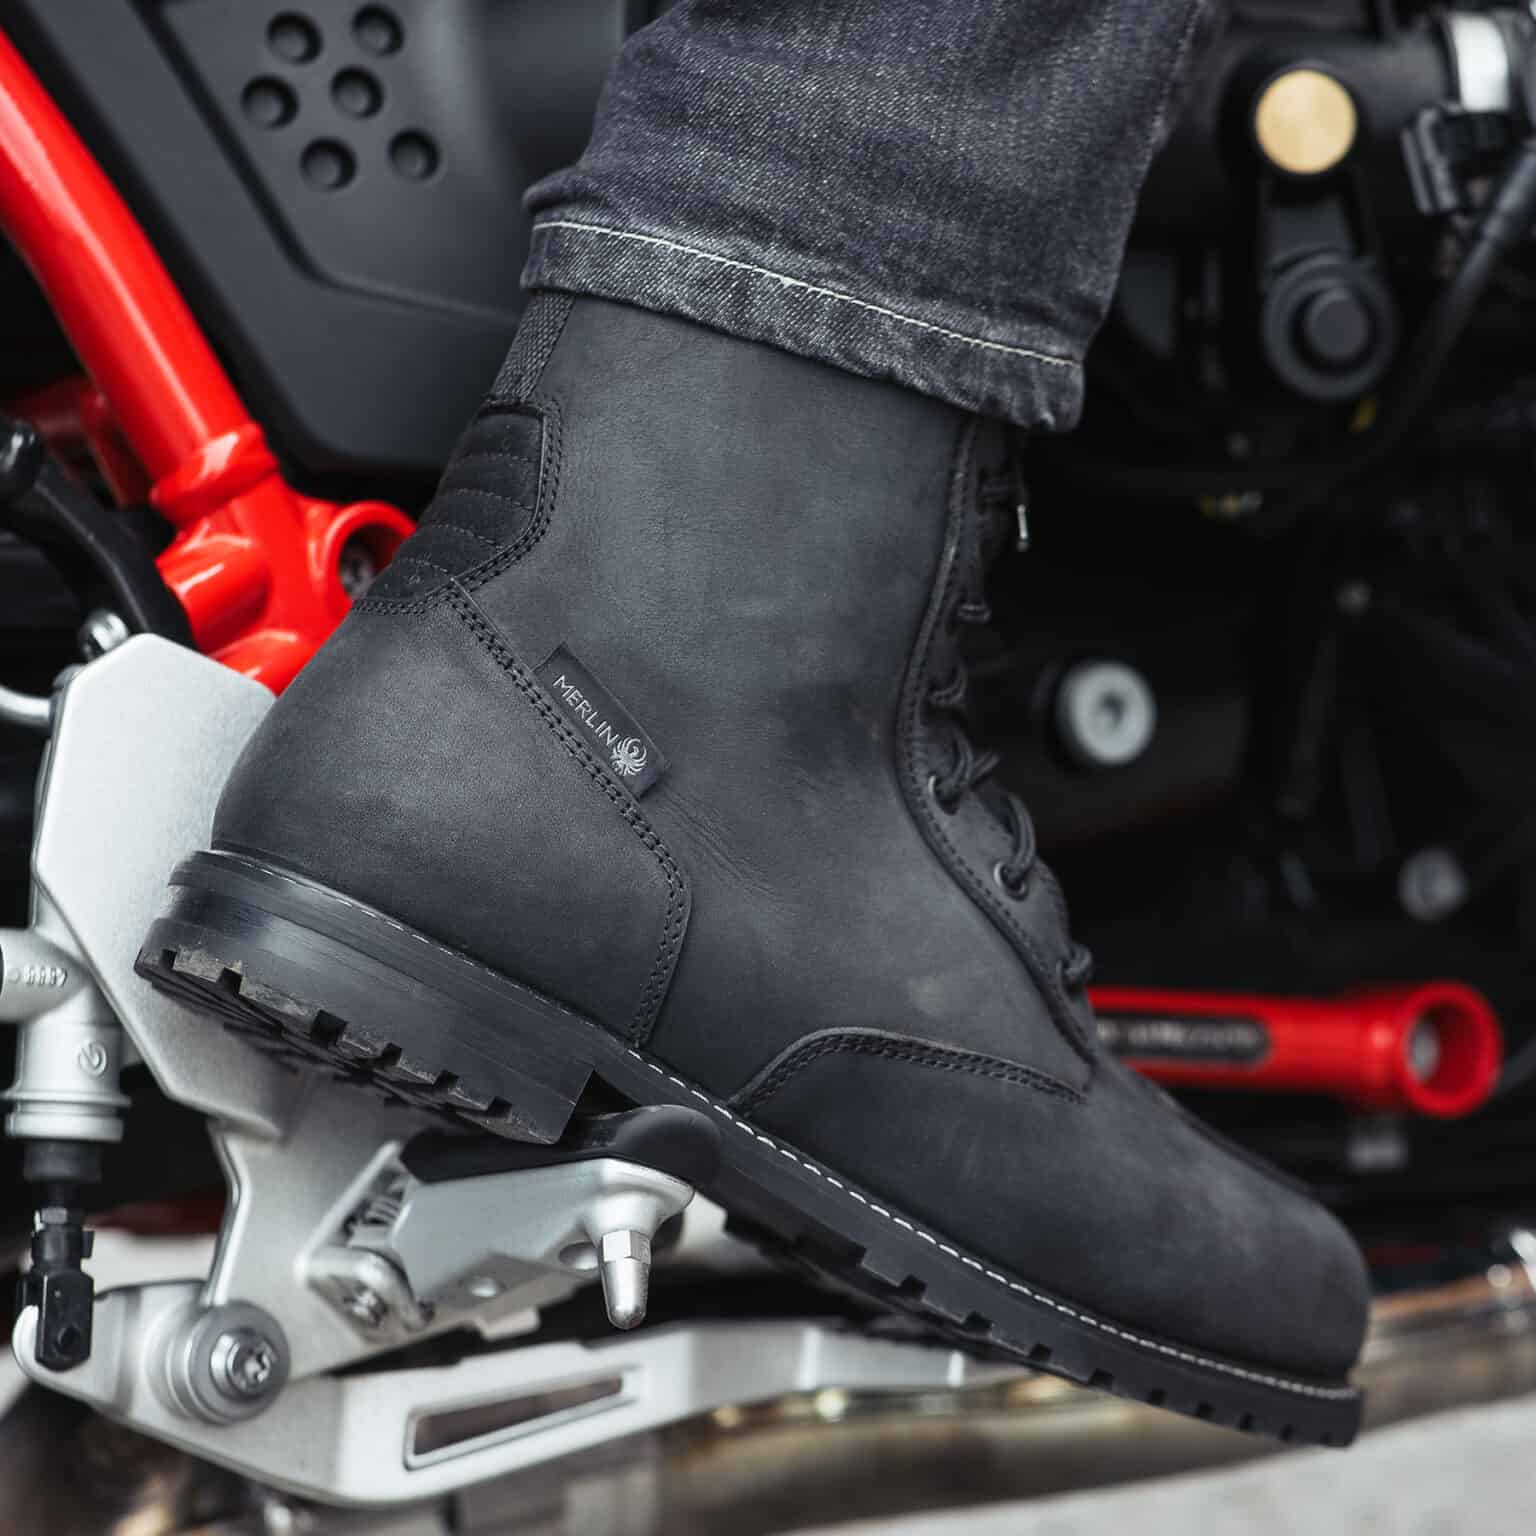 Drax 2 D3O Heritage Motorcycle Boot - Merlin Bike Gear